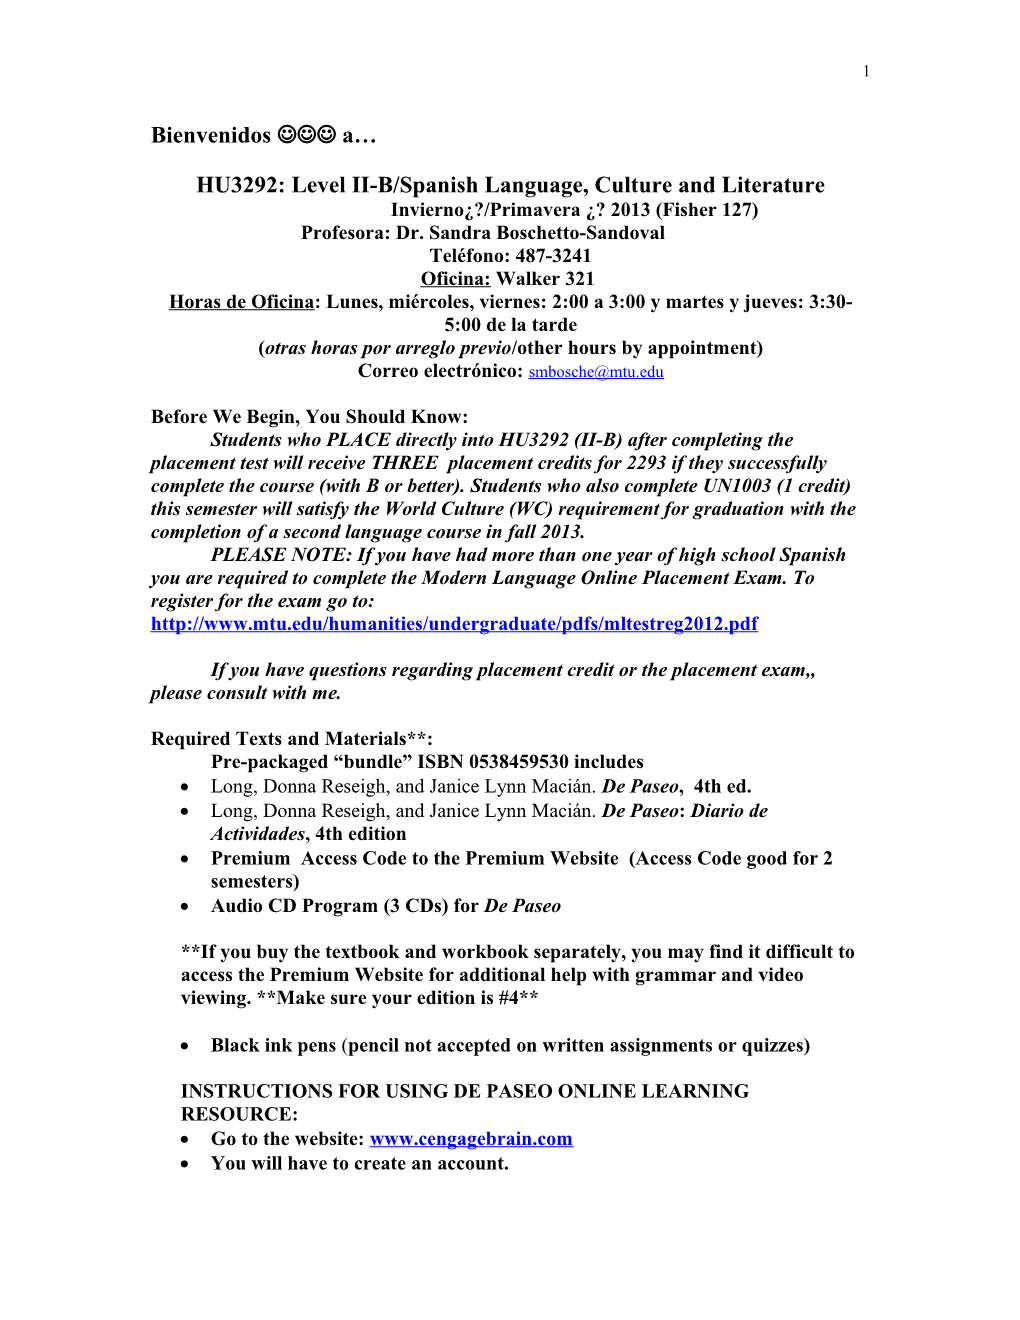 HU3292: Level II-B/Spanish Language, Culture and Literature